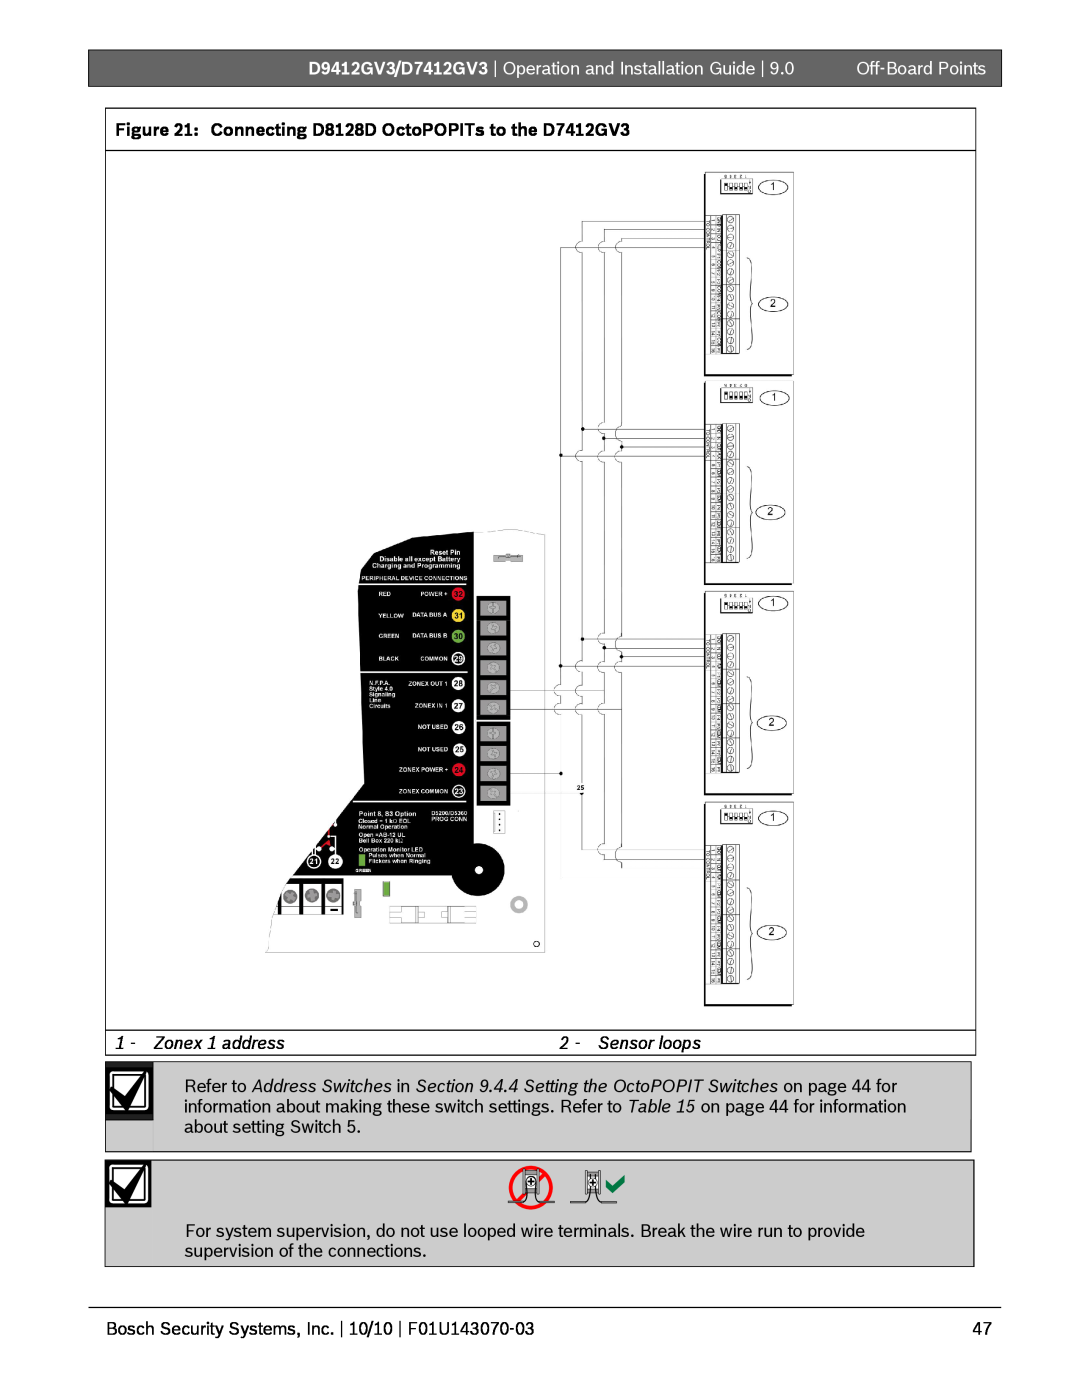 Bosch Appliances D7412GV3, D9412GV3 manual Off-BoardPoints 